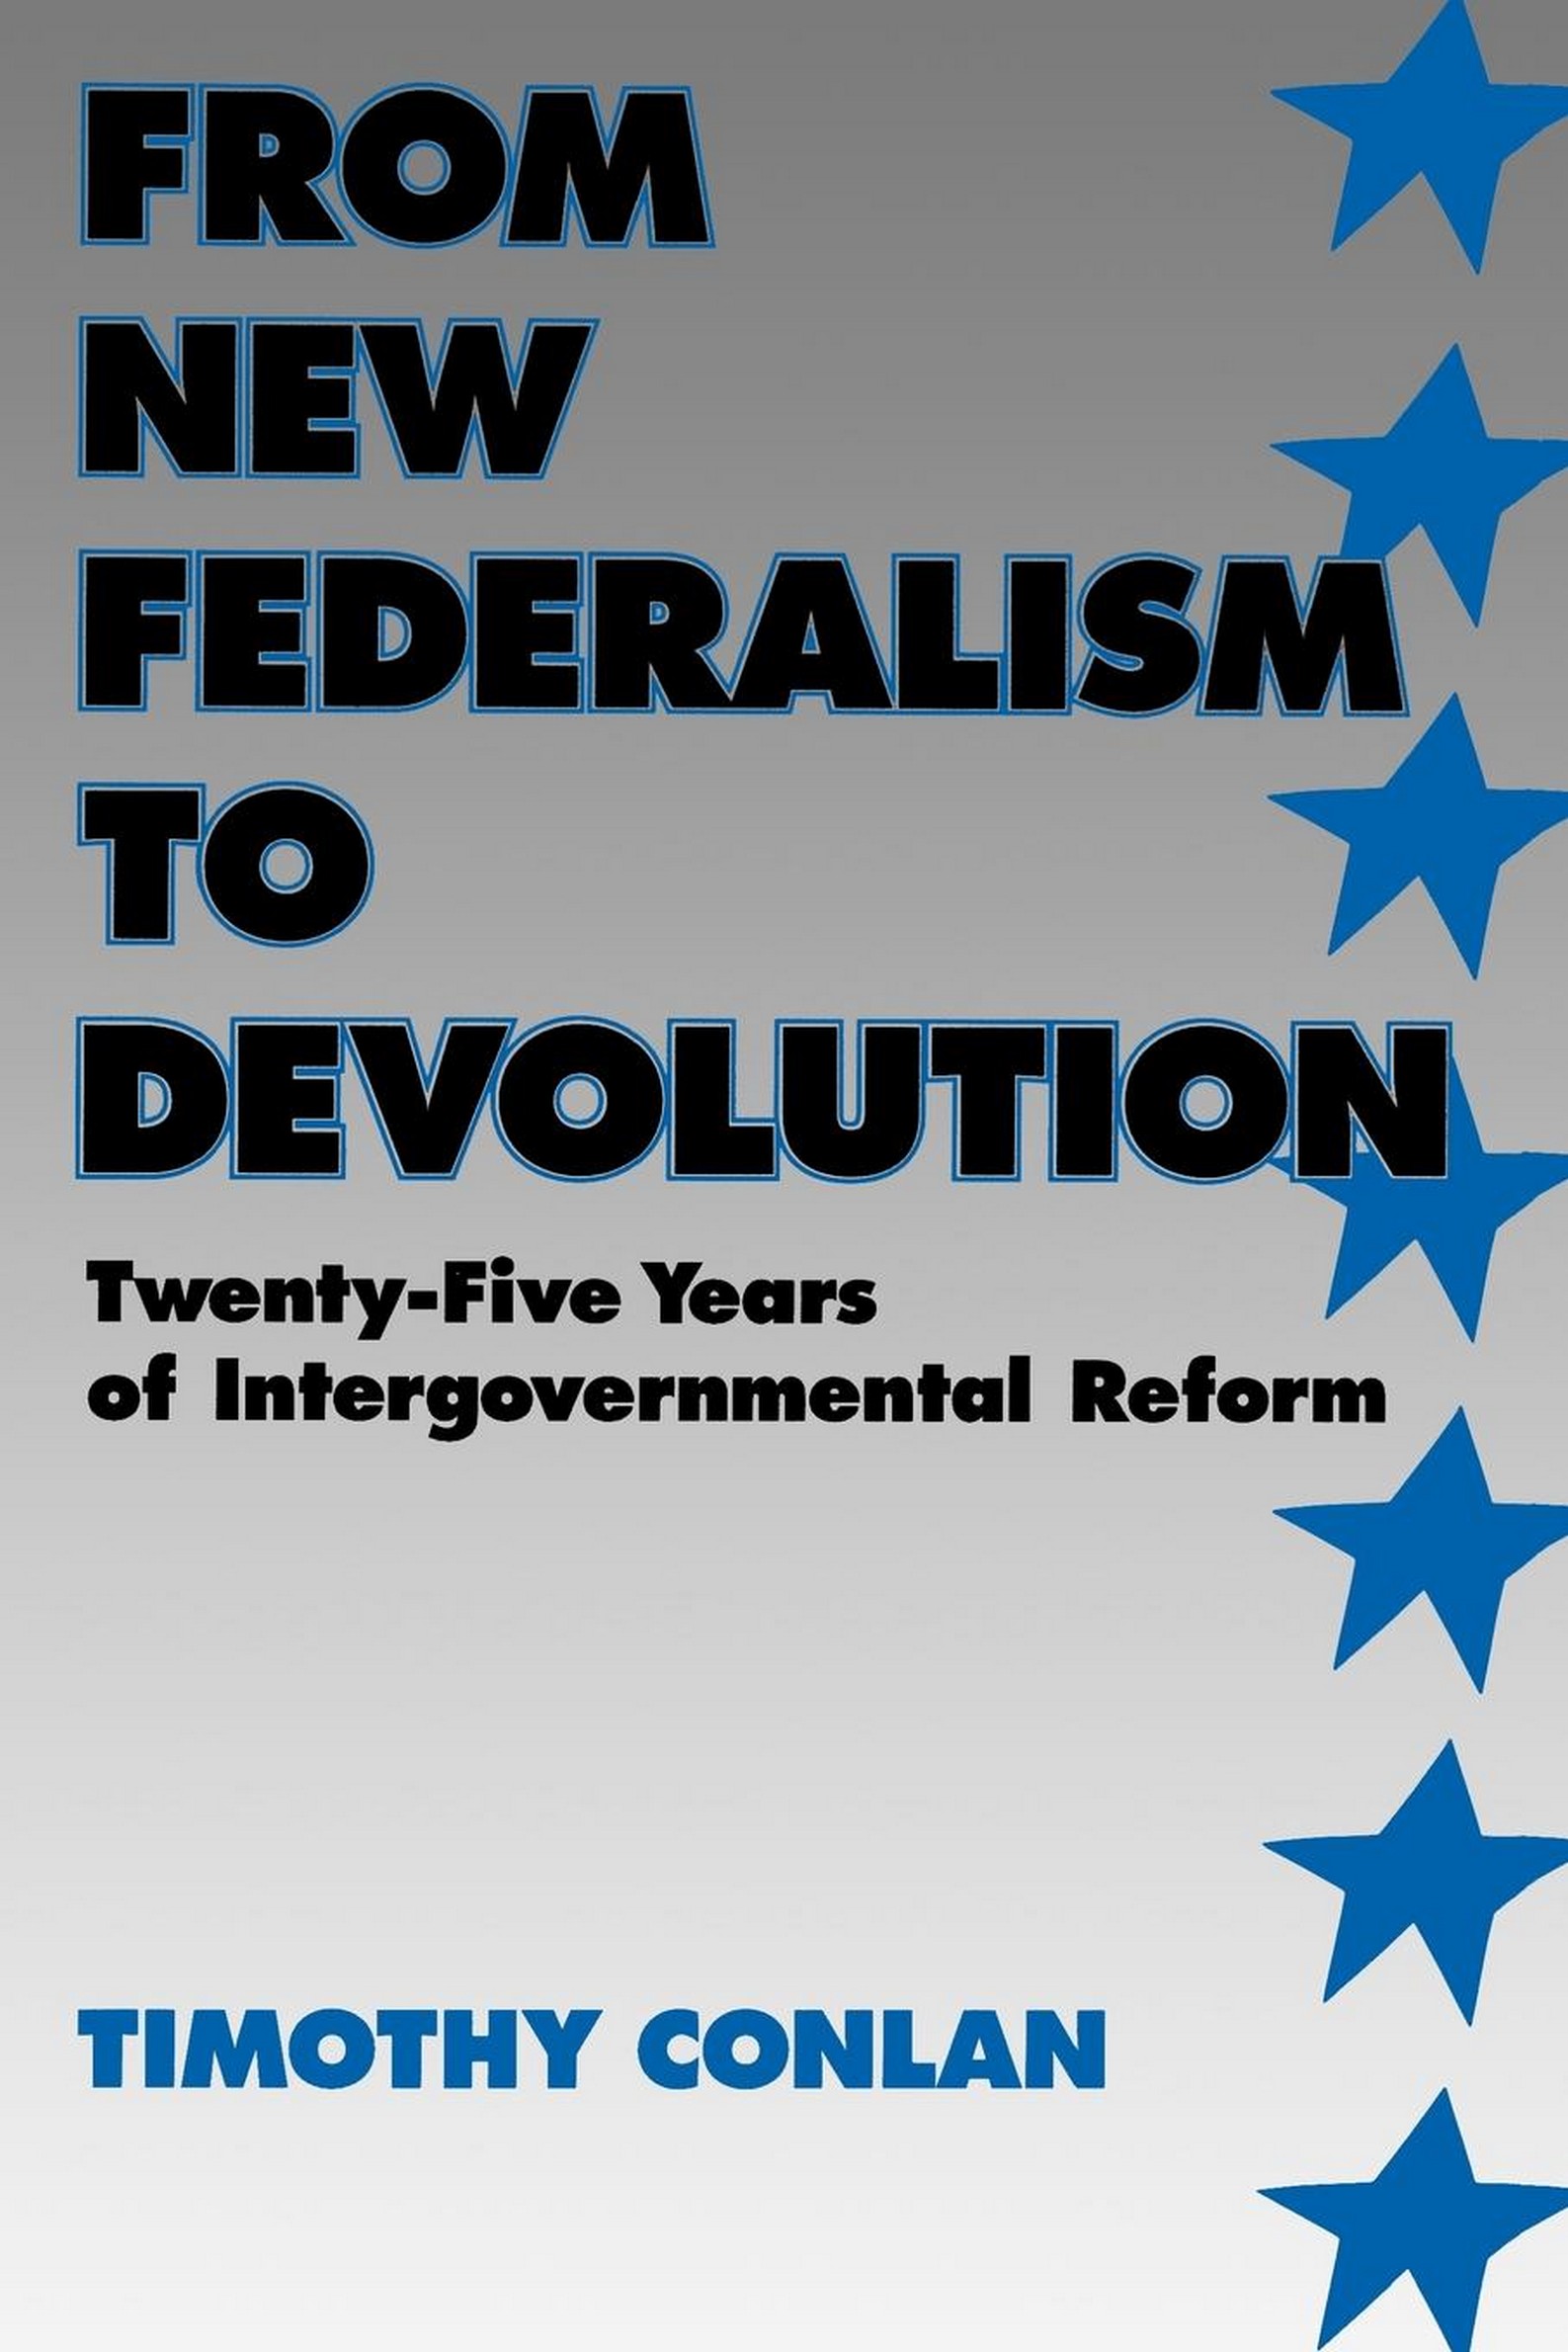 From New Federalism to Devolution: Twenty-Five Years of Intergovernmental Reform